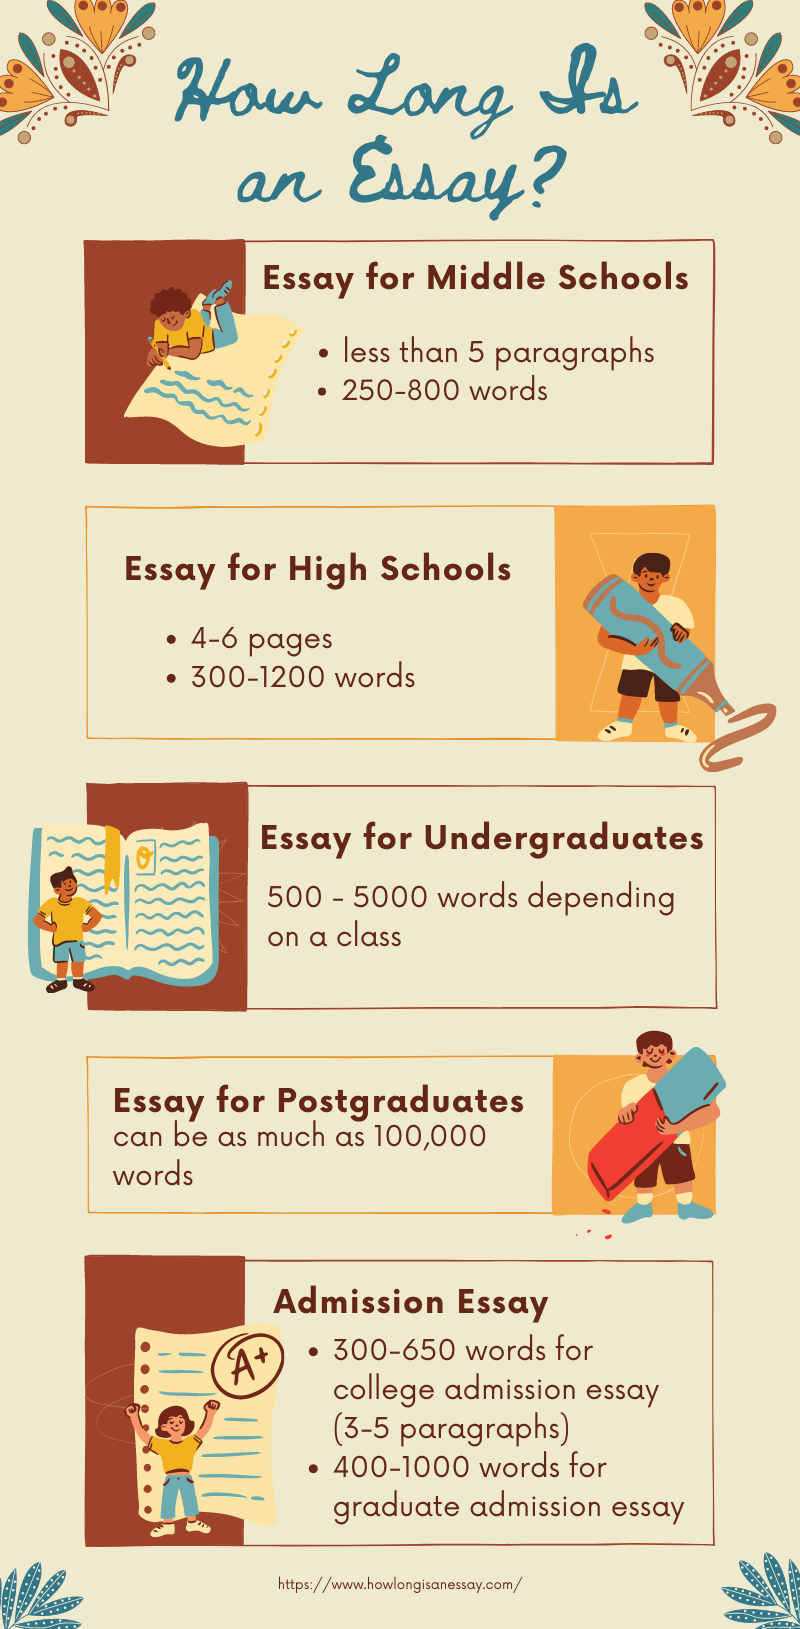 how long should an essay be in elementary school